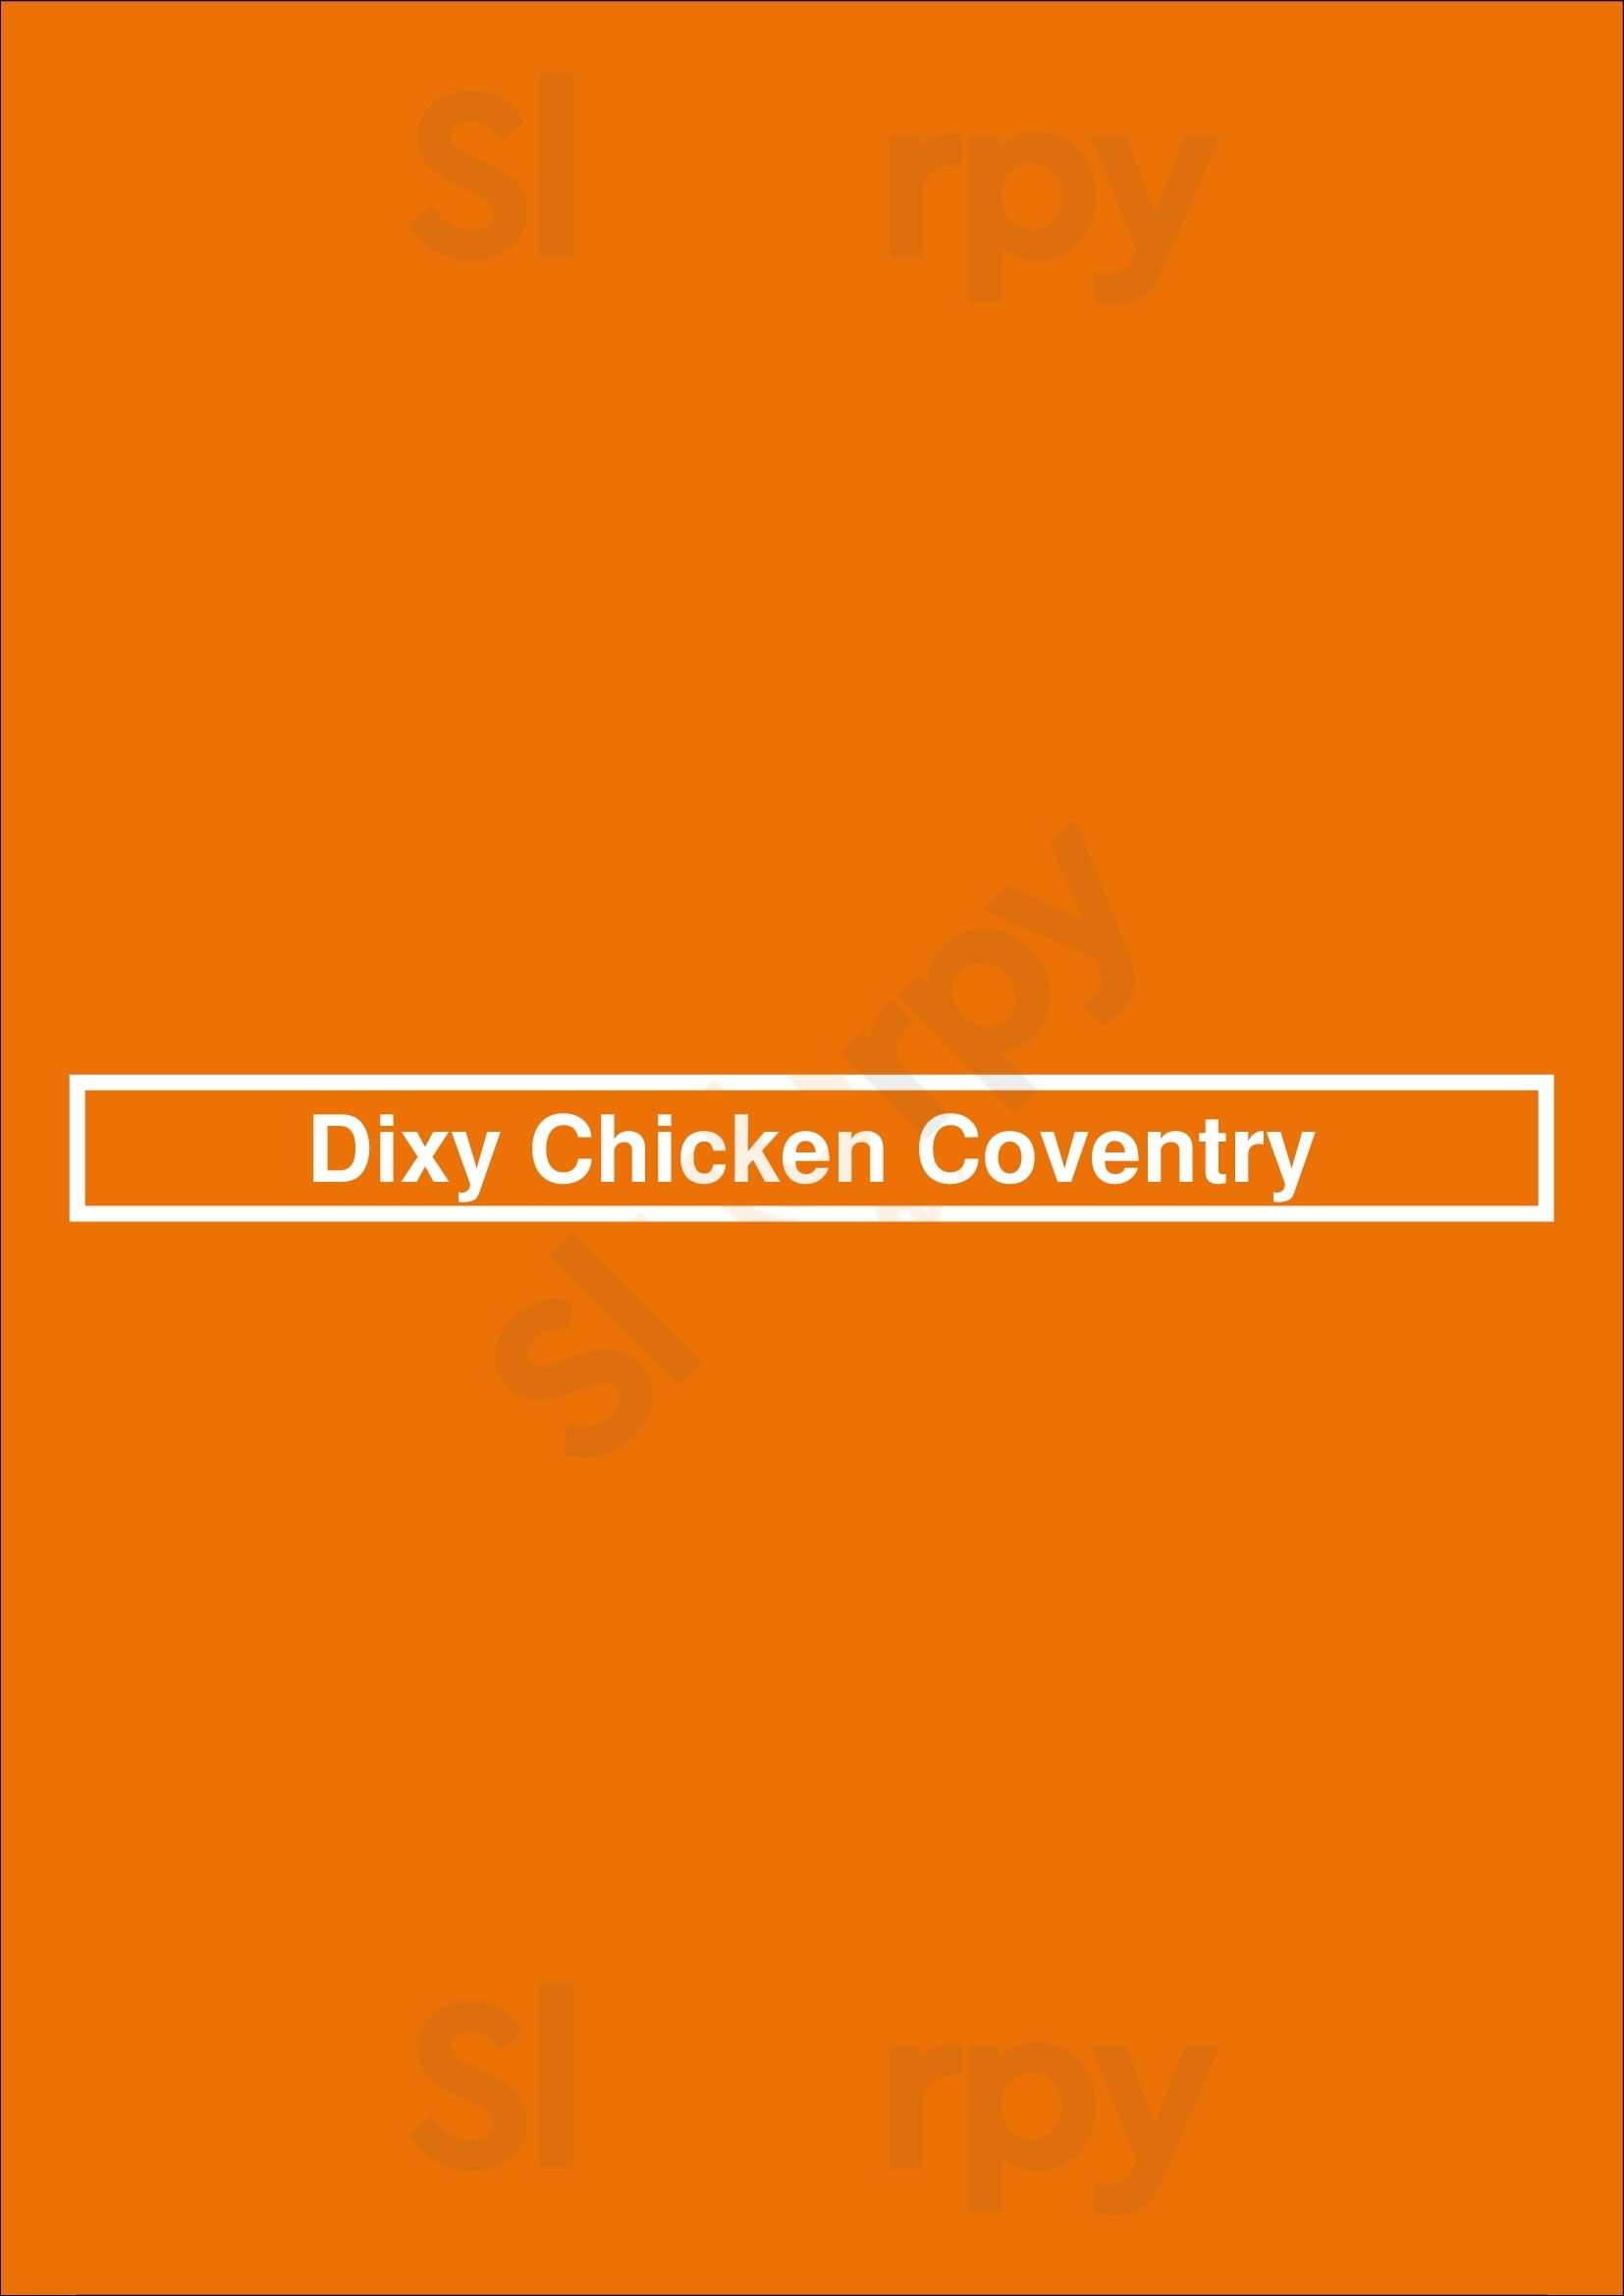 Dixy Chicken Coventry Coventry Menu - 1